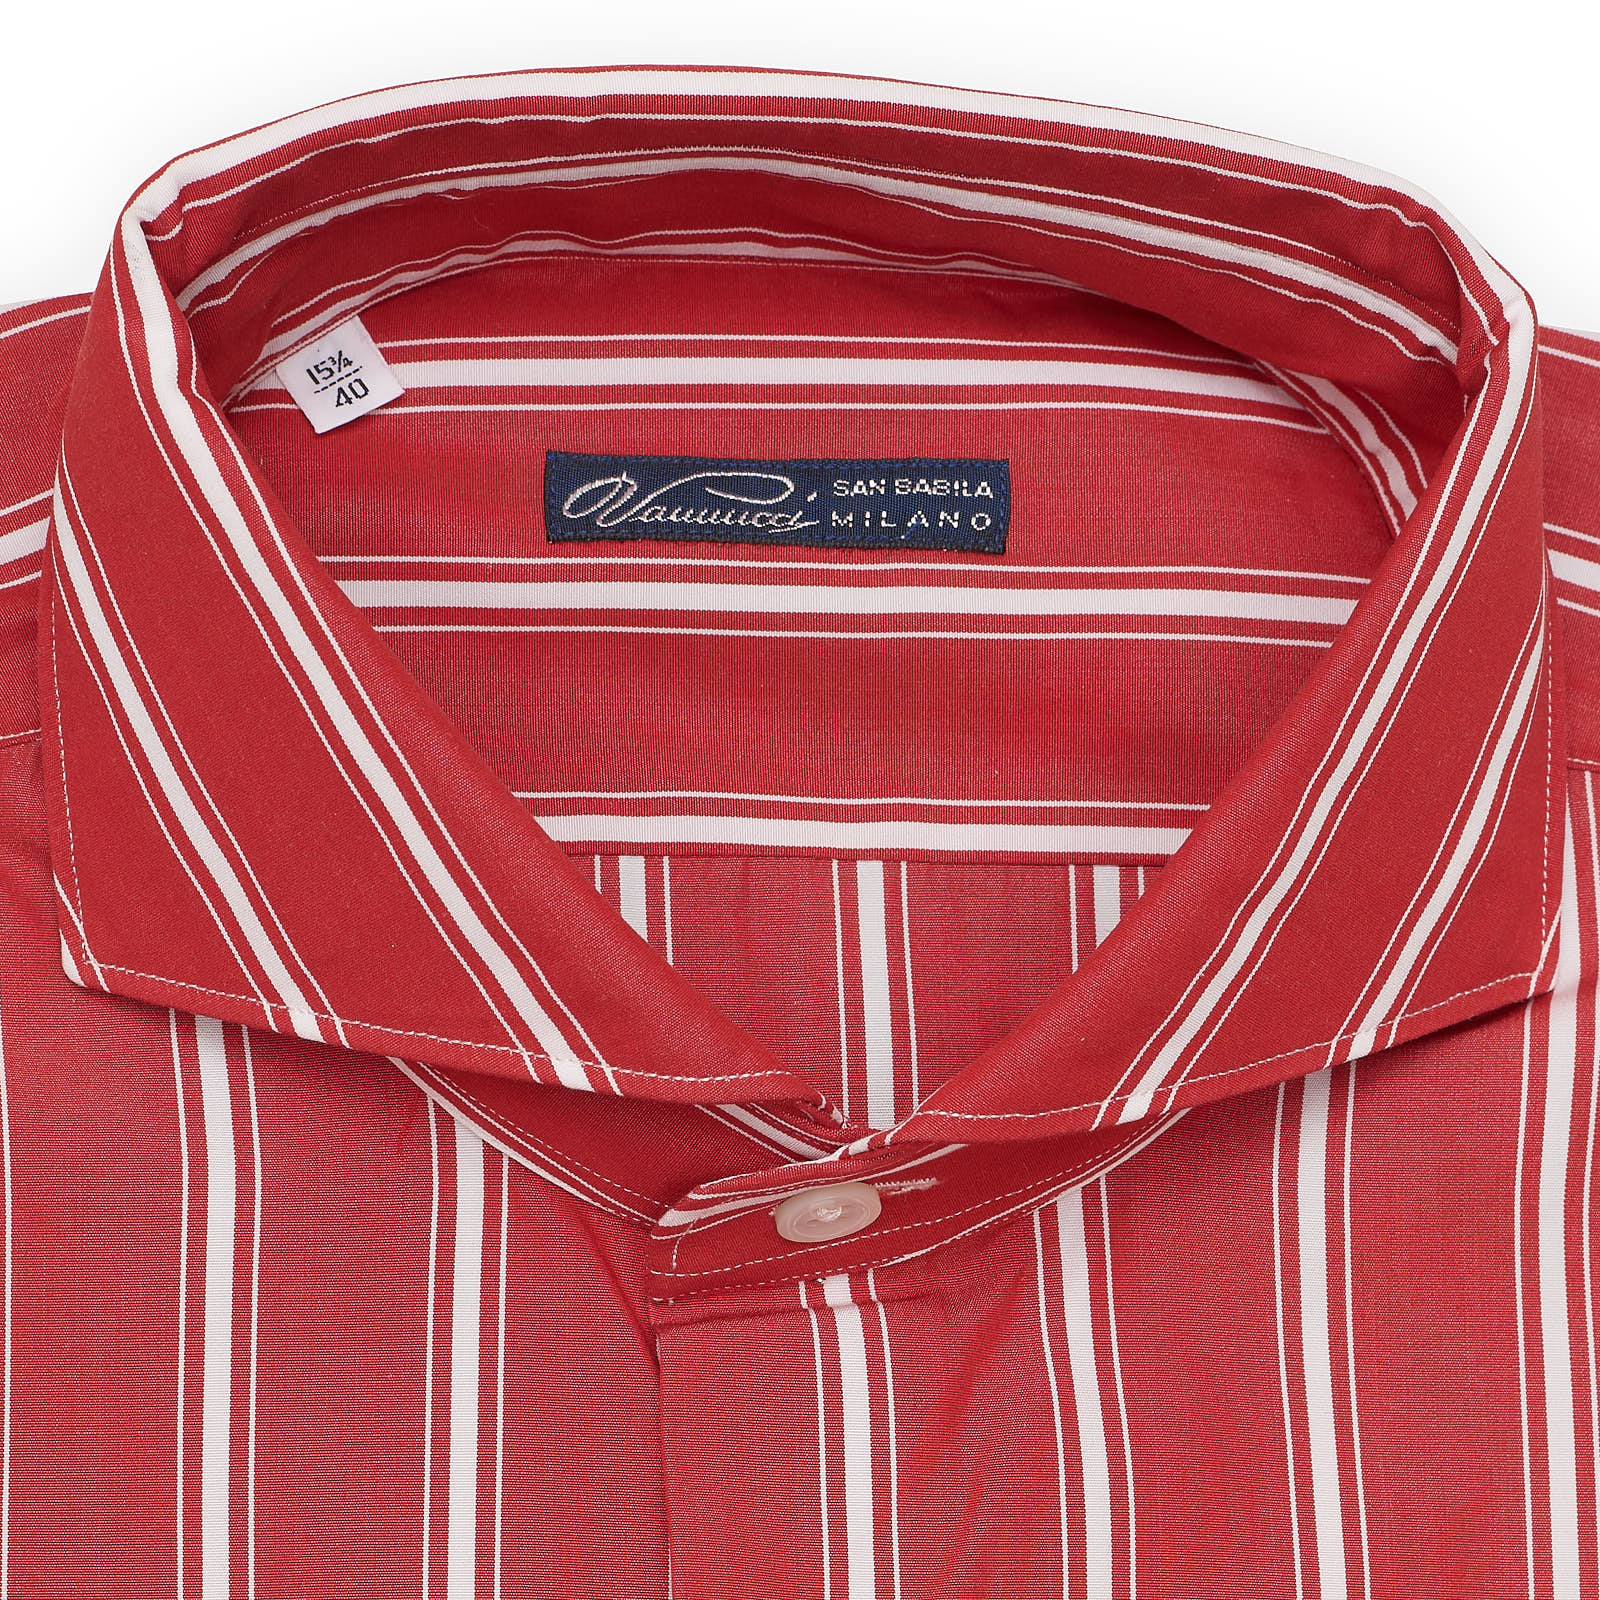 VANNUCCI Milano White Striped Cotton Dress Shirt EU 40 NEW US 15.75